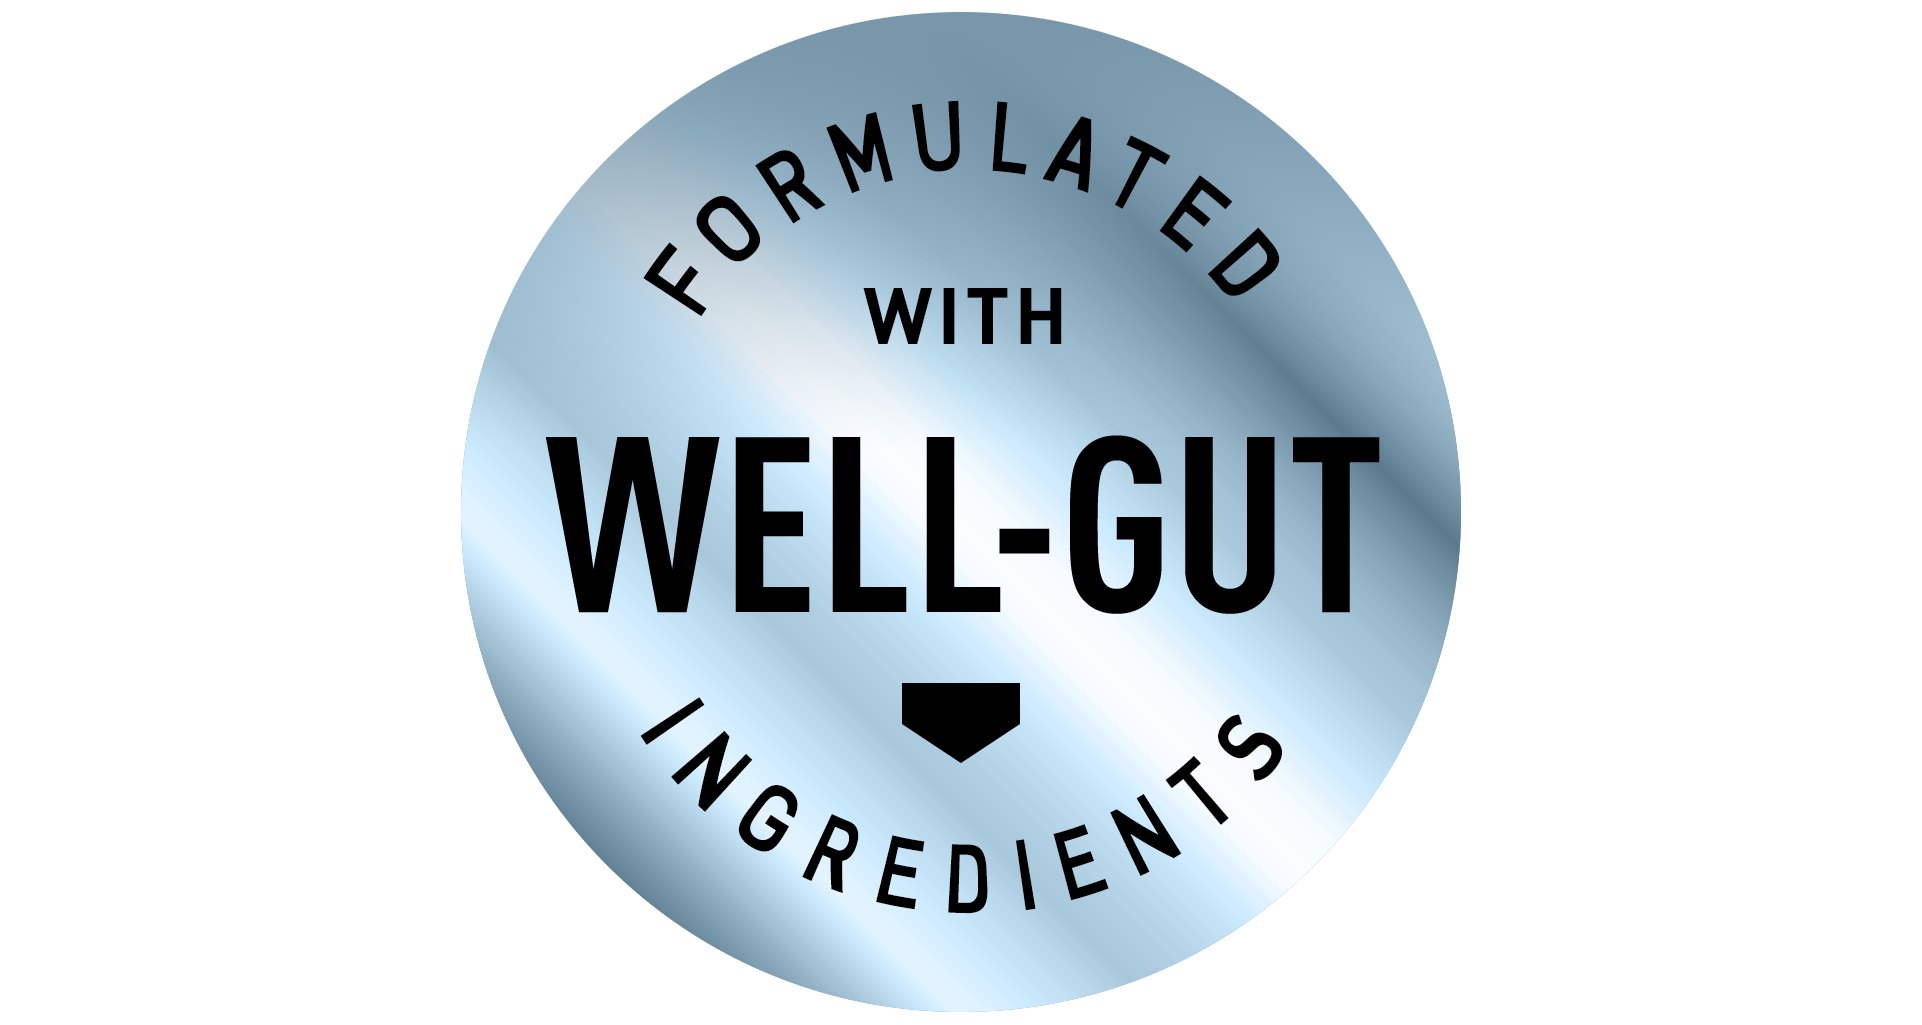 EQ8™ Senior Gut Health Multi-Textured Feed image 1++